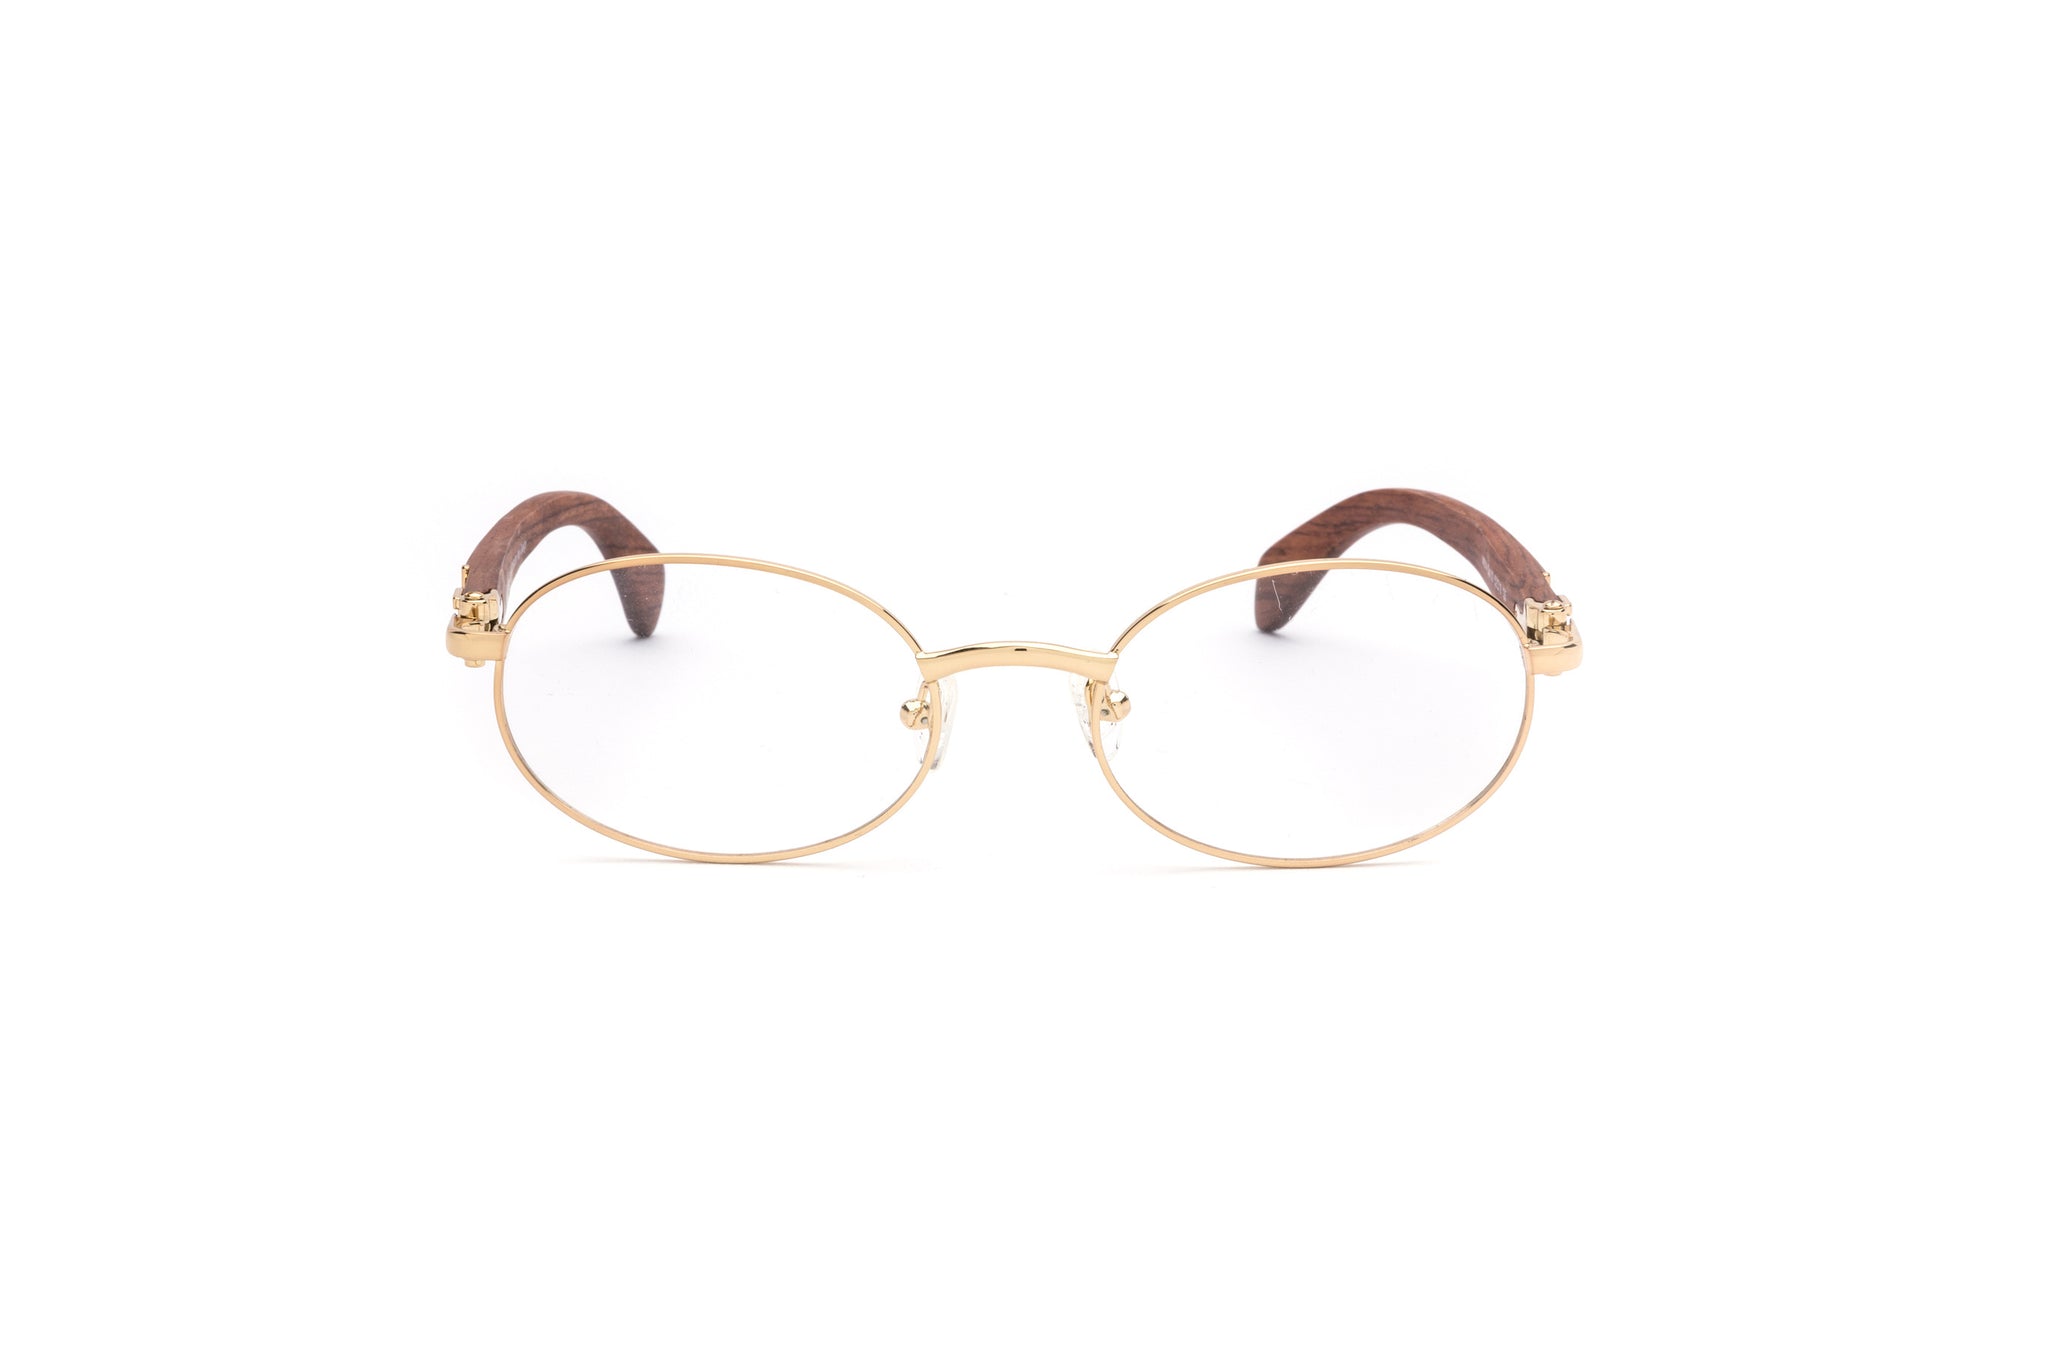 Gold wood cartier style glasses oval frames vintage